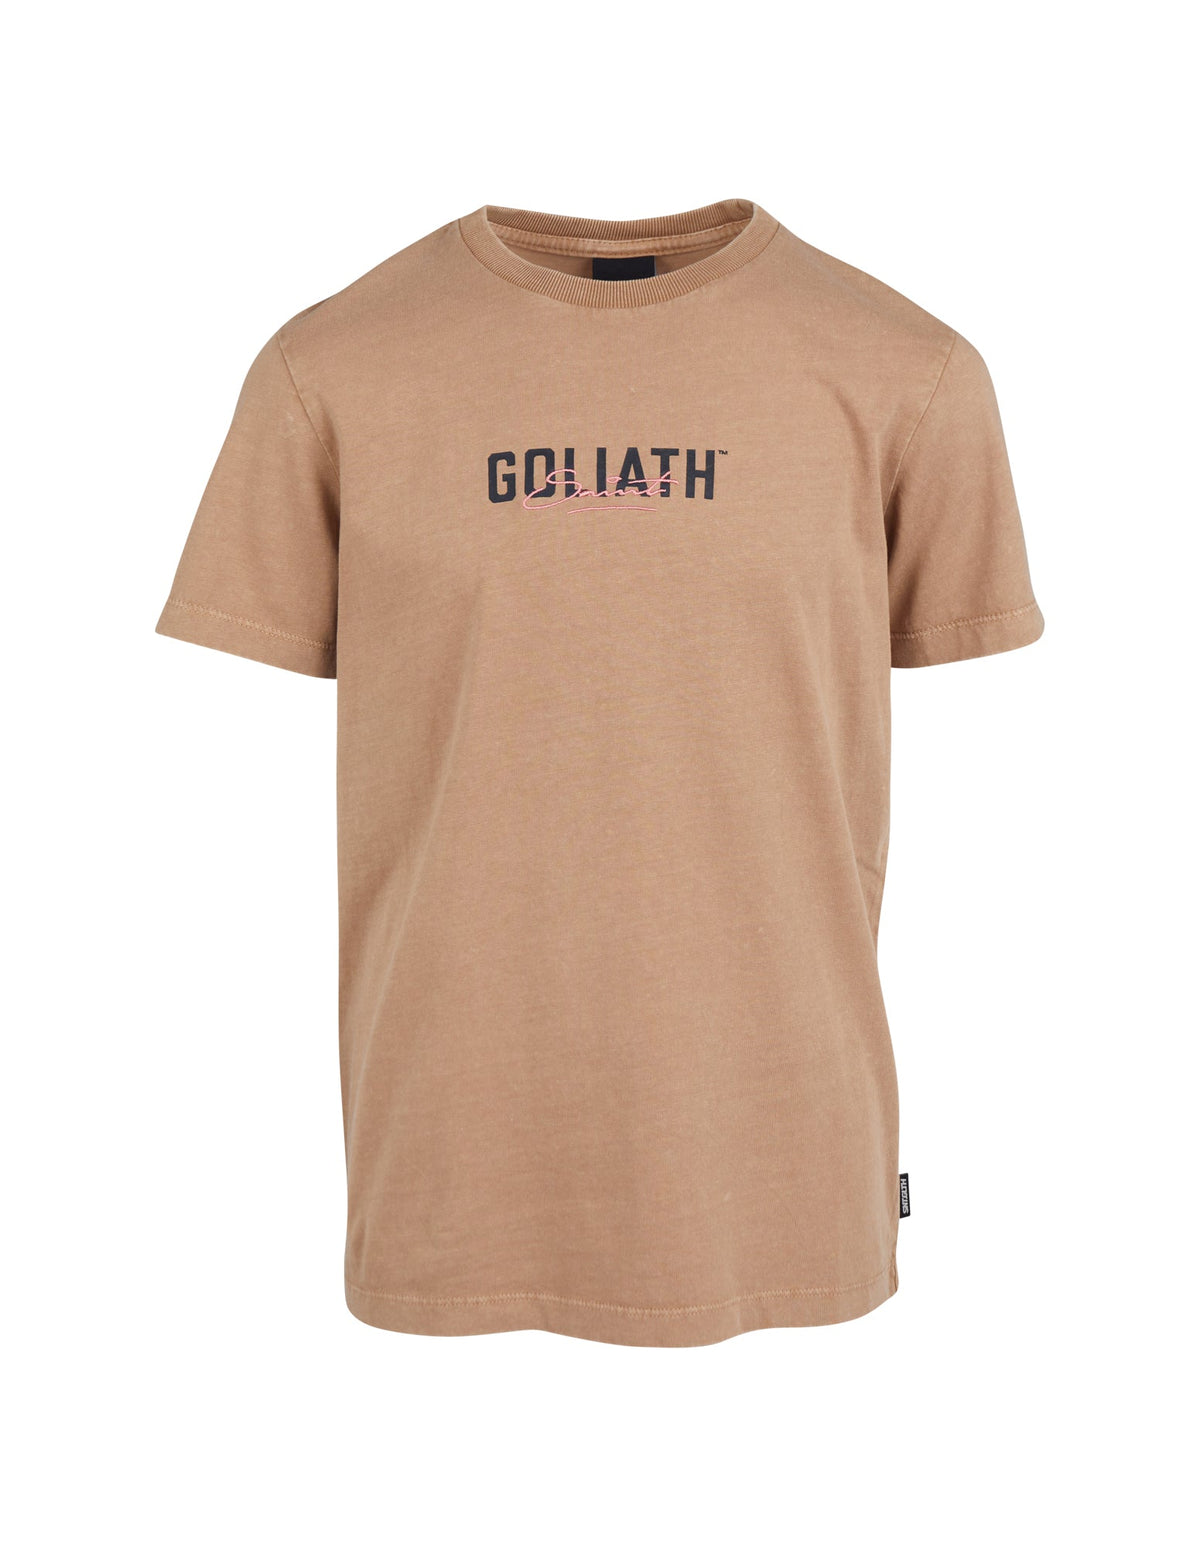 St Goliath 3-7-Capital Tee Tan-Edge Clothing